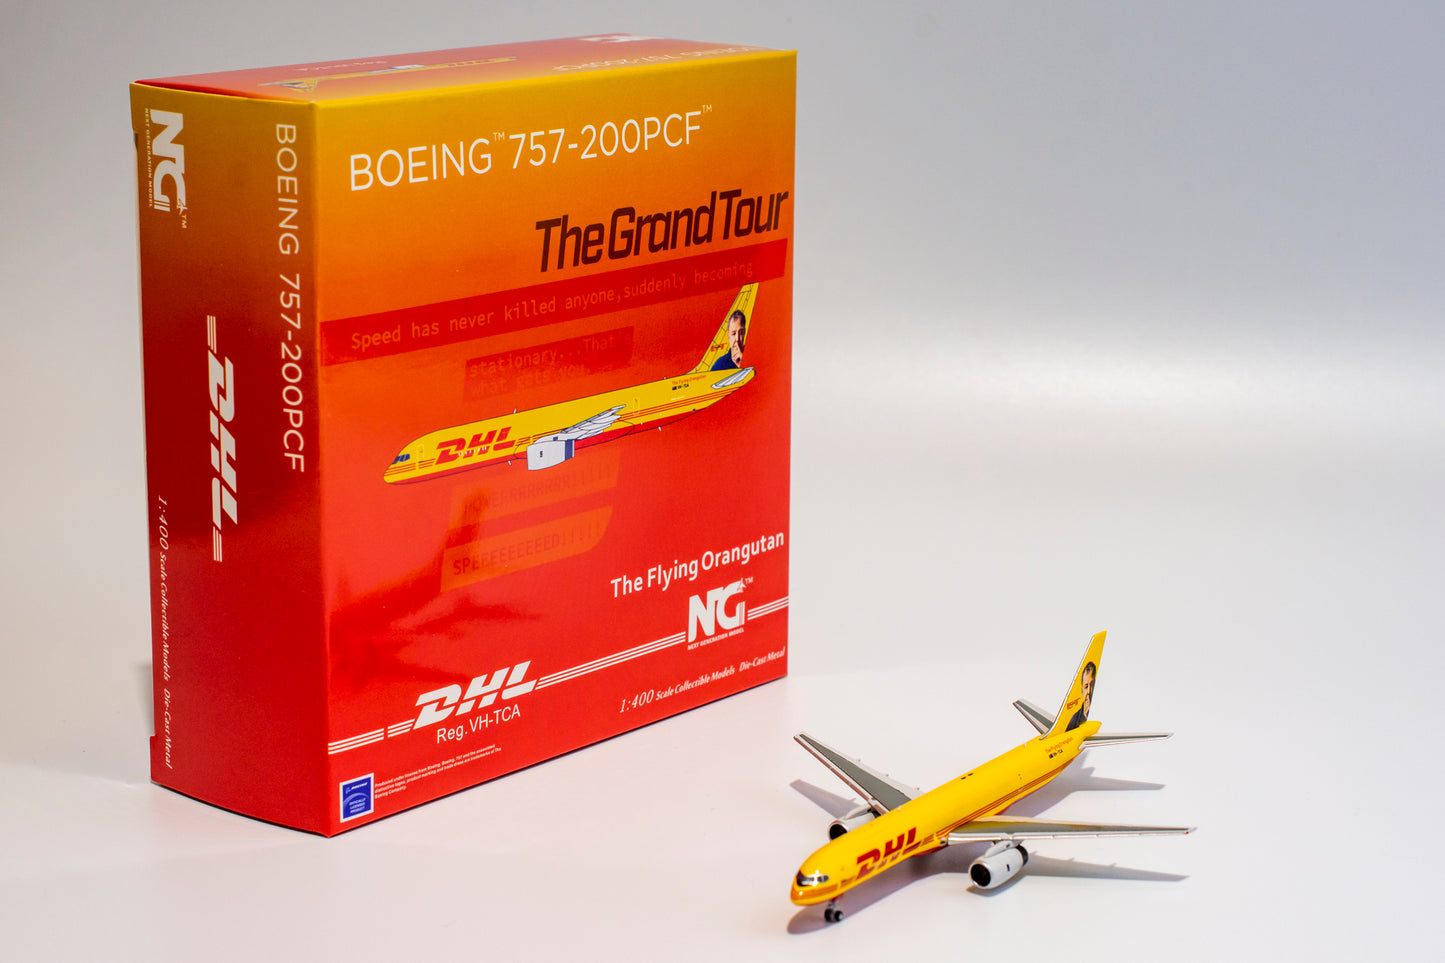 1:400 NG Models DHL Aviation Boeing 757-200 "Jeremy Clarkson" VH-TCA NG53169